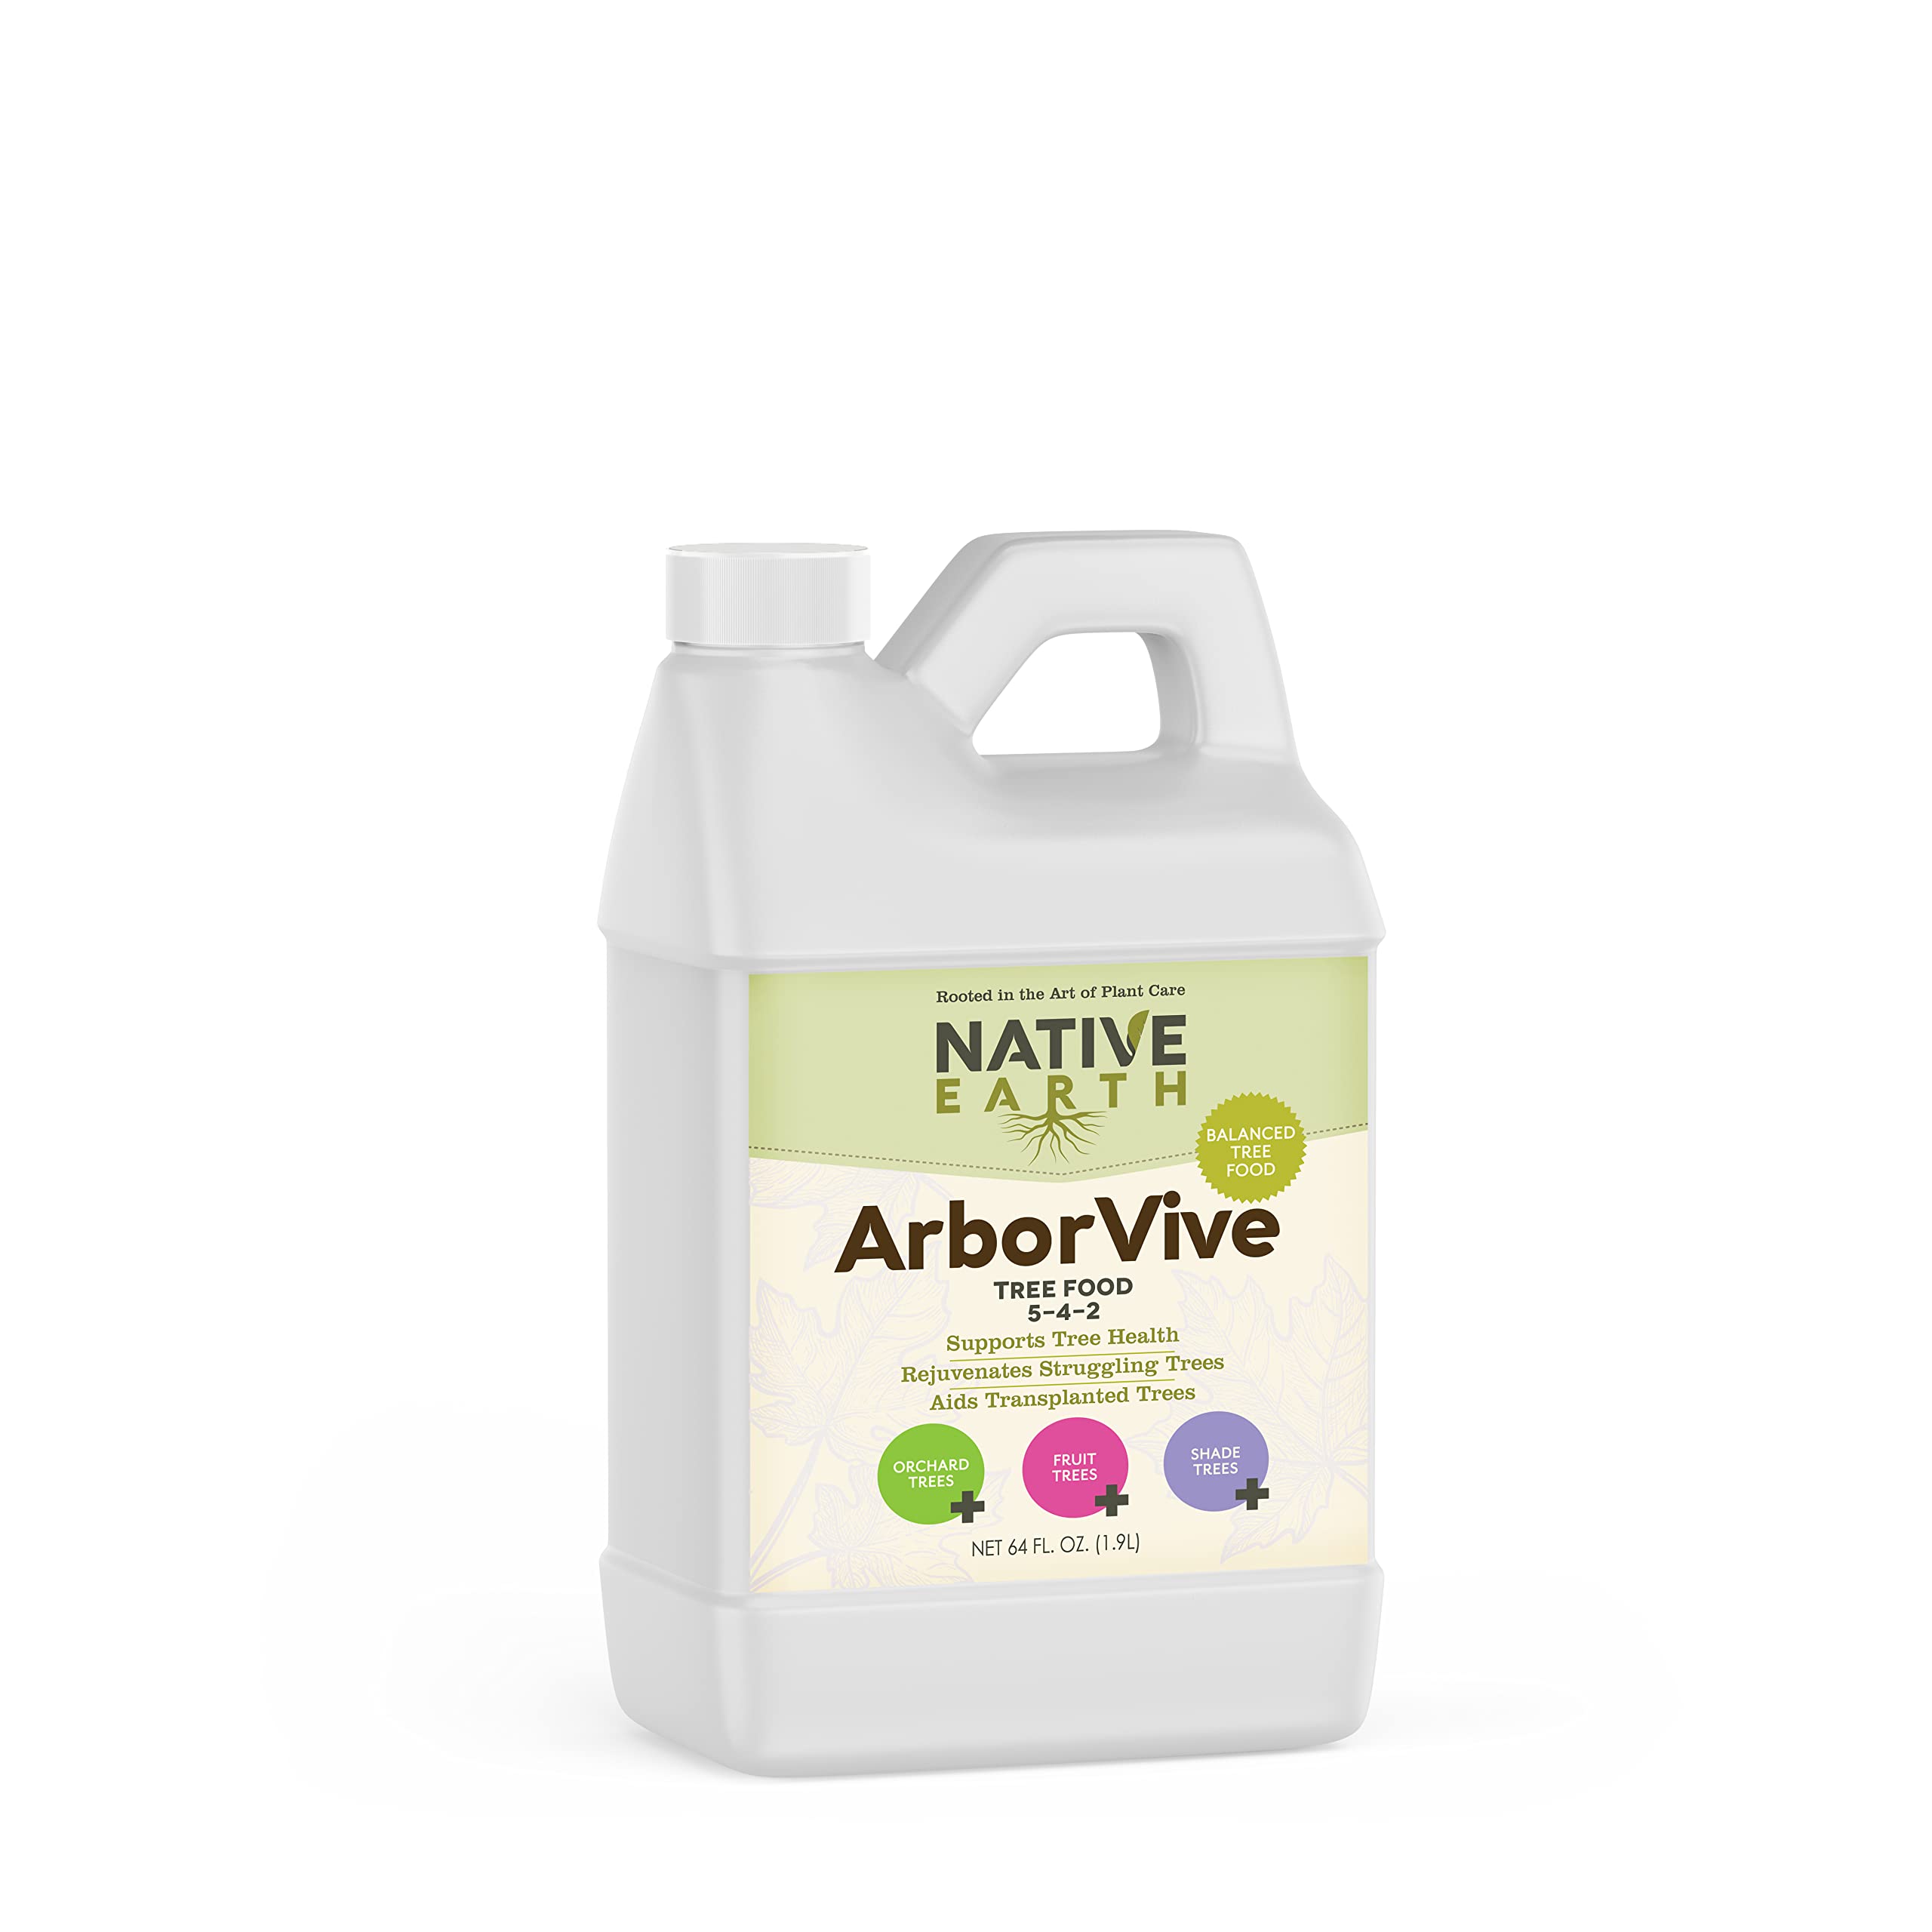 Native Earth ArborVive Fertilizer